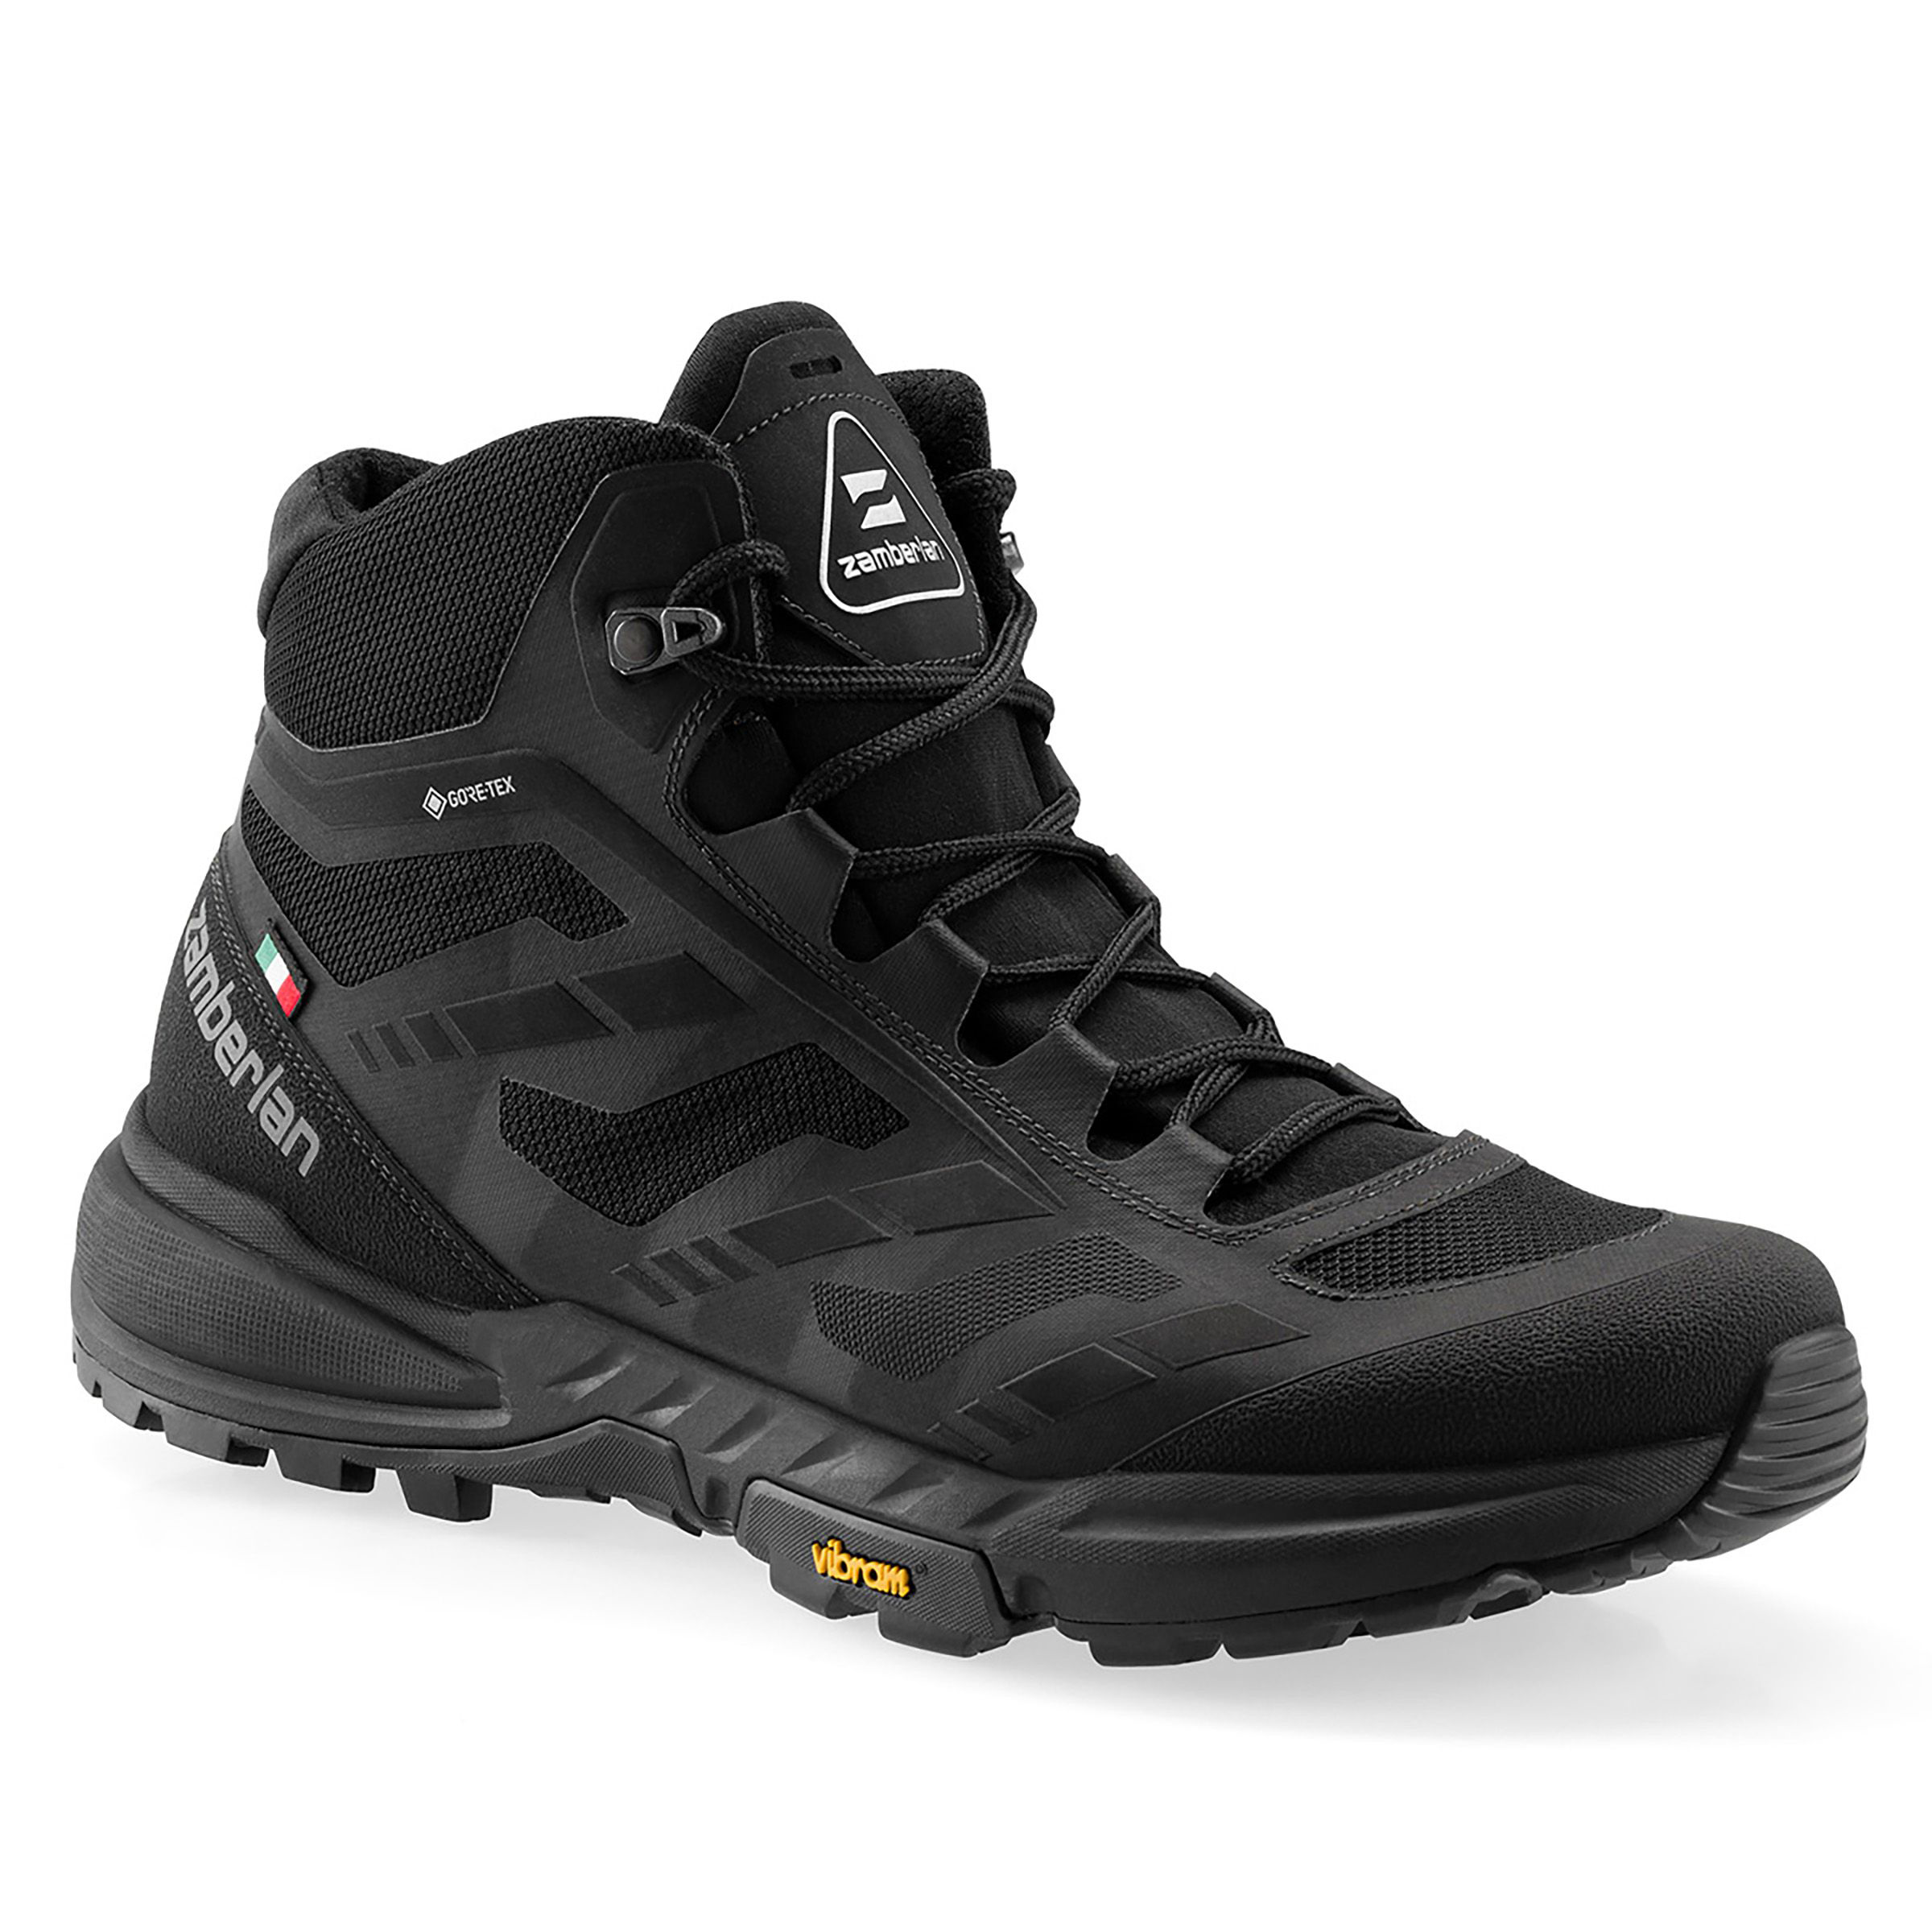 Zamberlan 219 Anabasis GTX Waterproof Mid Hiking Boots for Men - Black - 8.5M